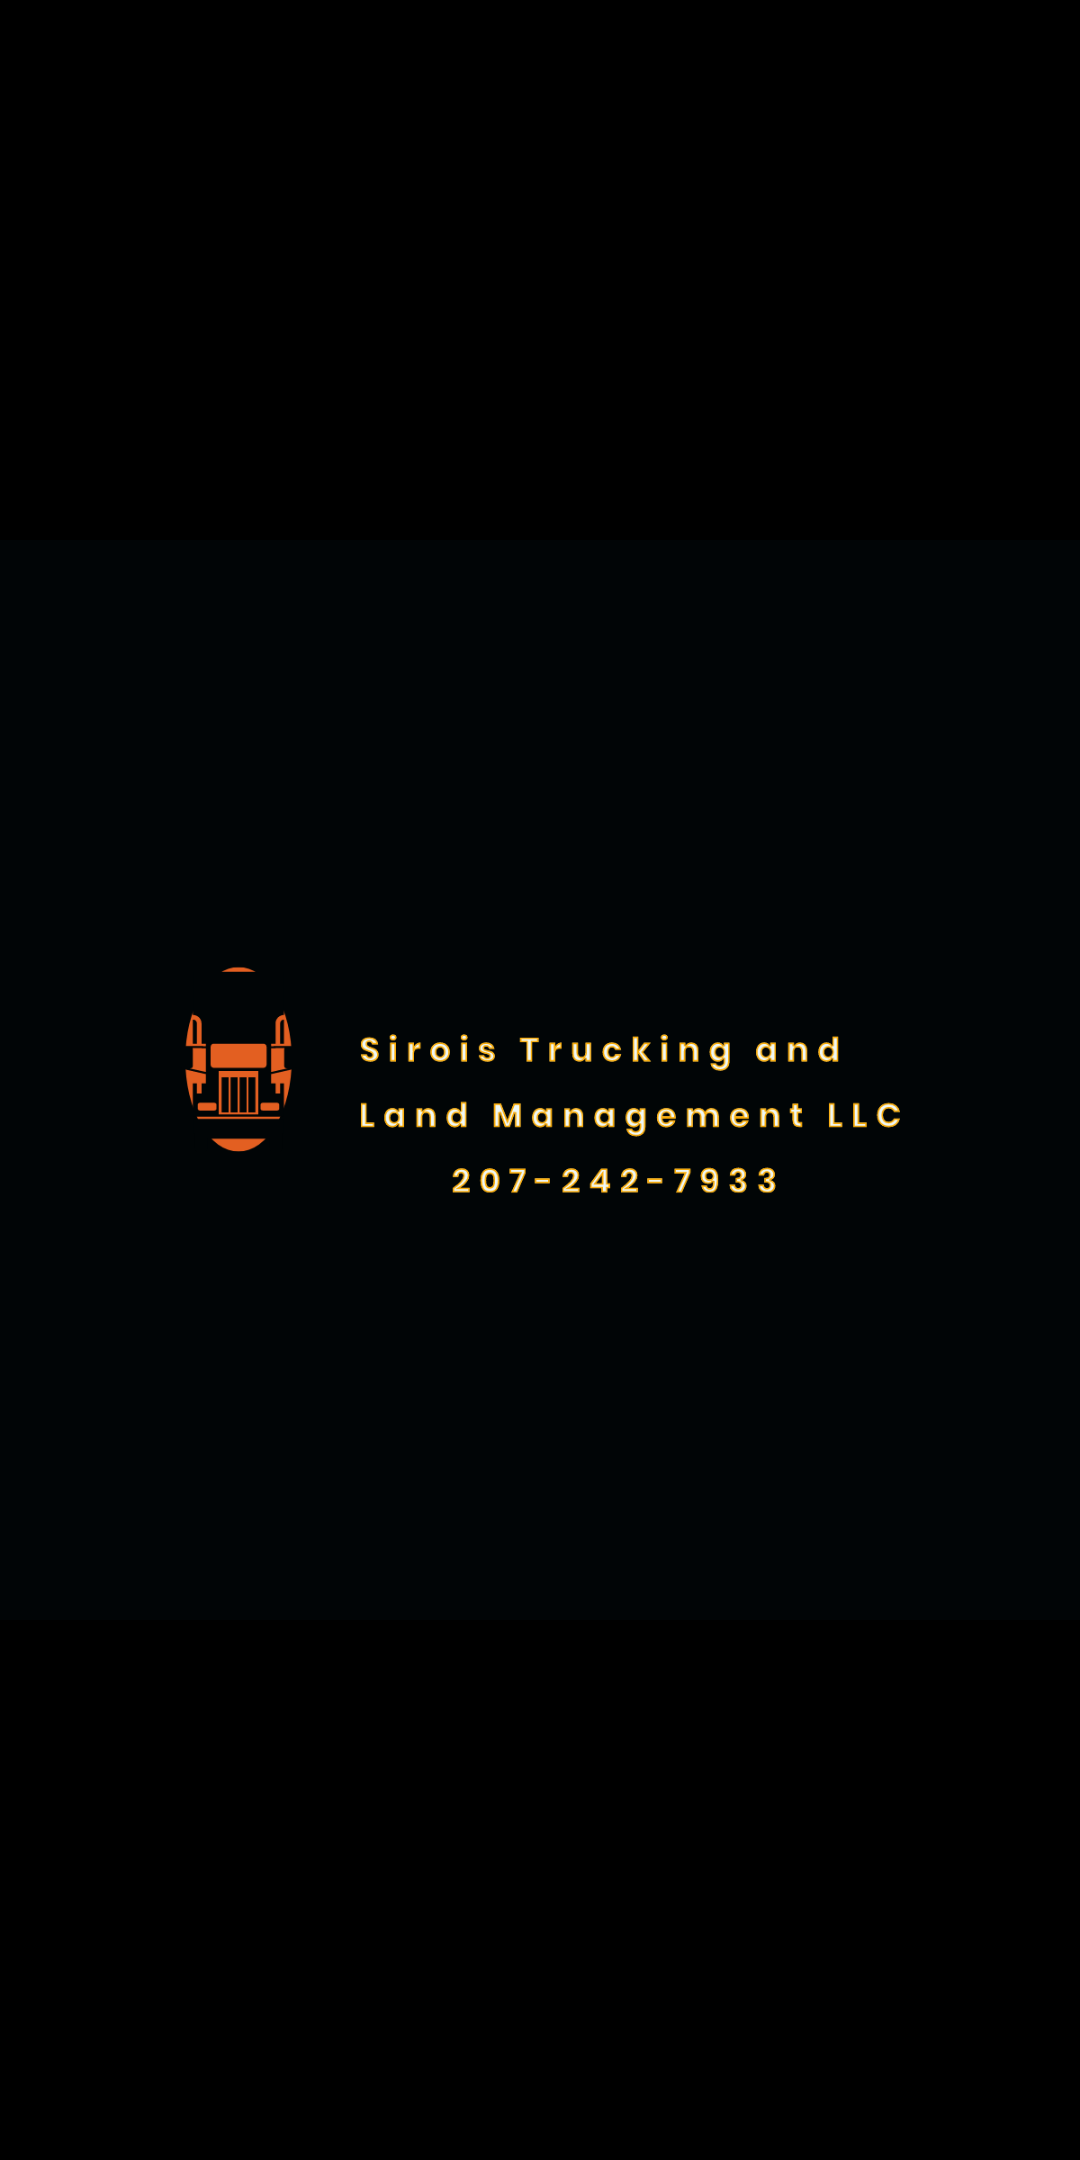 Sirois Trucking and Land Management Logo